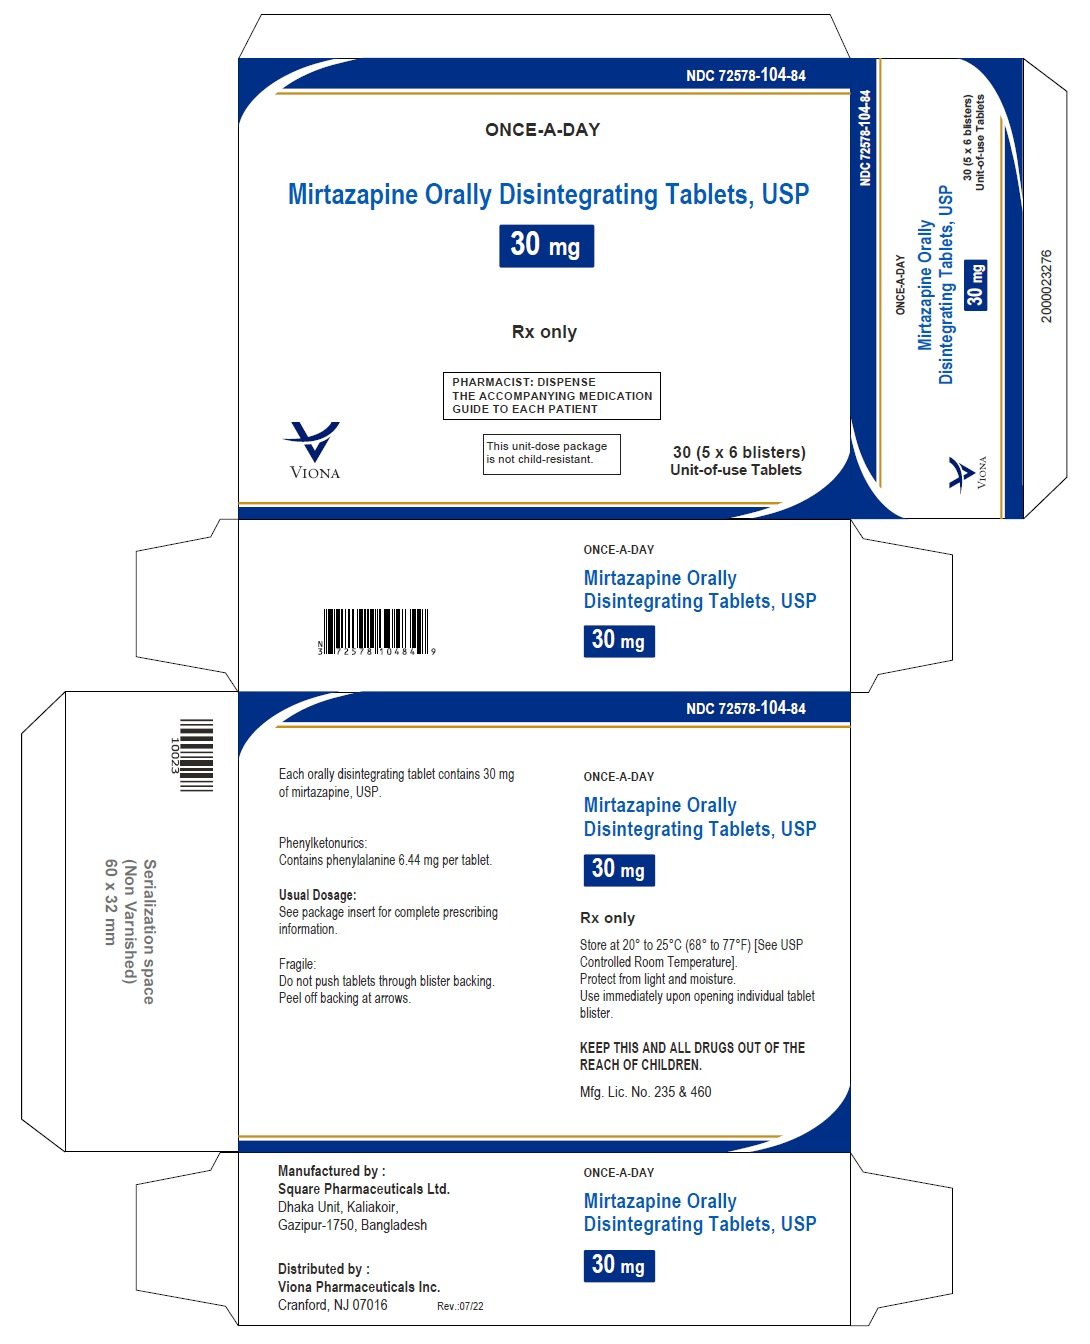 Mirtazapine orally disintegrating tablets USP, 30 mg